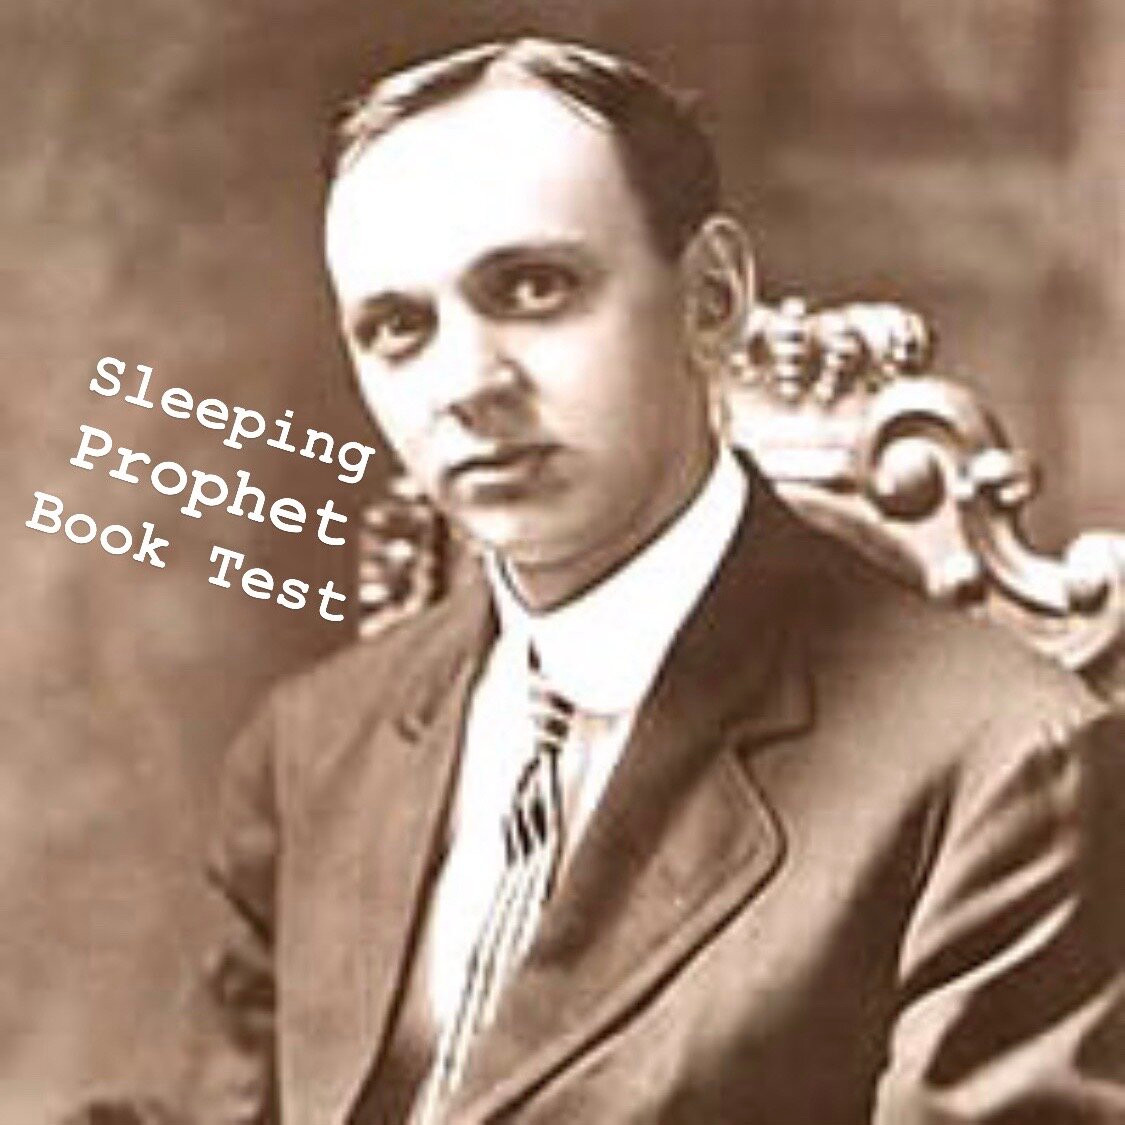 Joe Diamond - The Sleeping Prophet Book Test